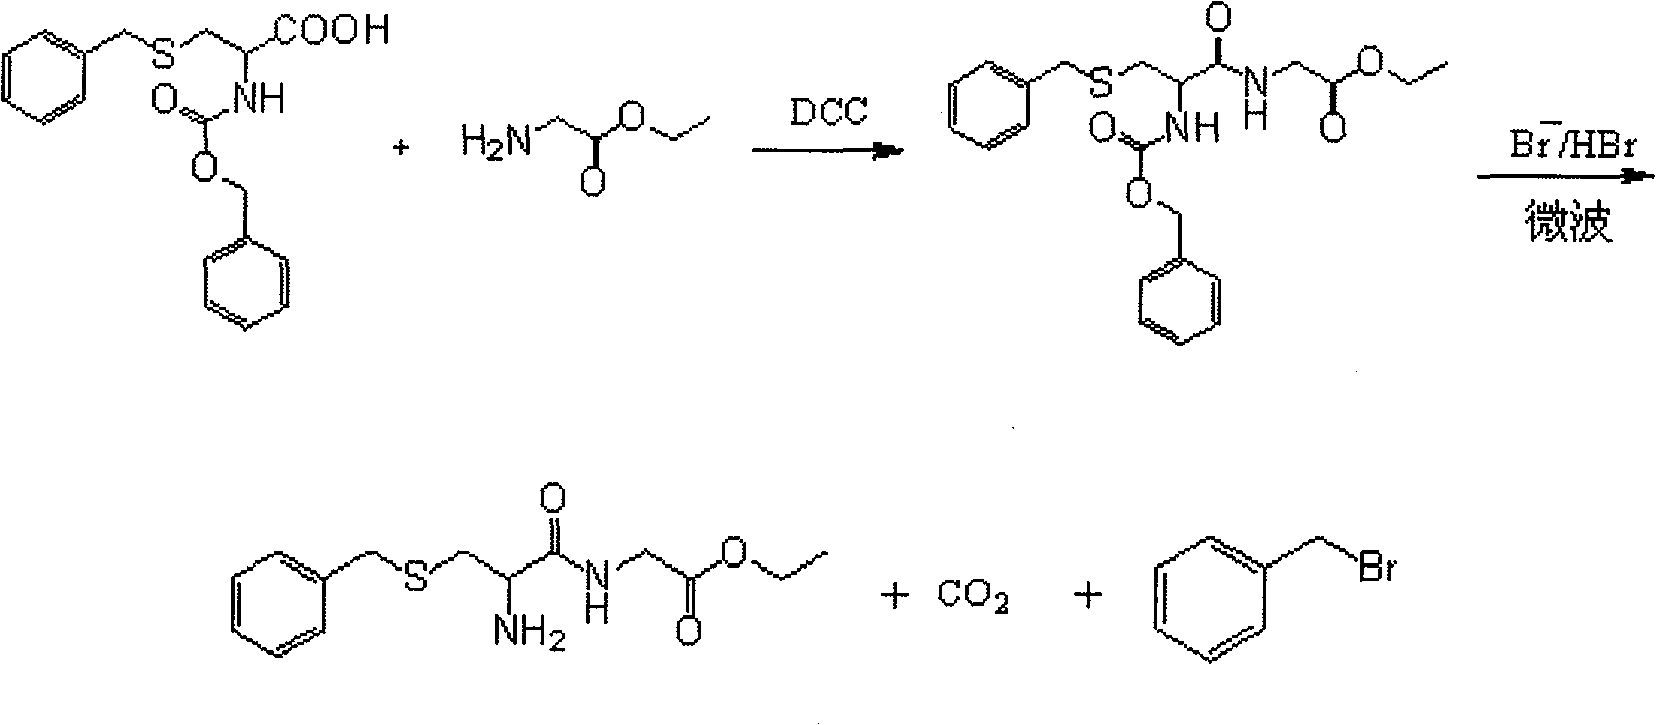 Method for preparing S-benzyl cysteinyl glycine ethyl ester under microwave condition